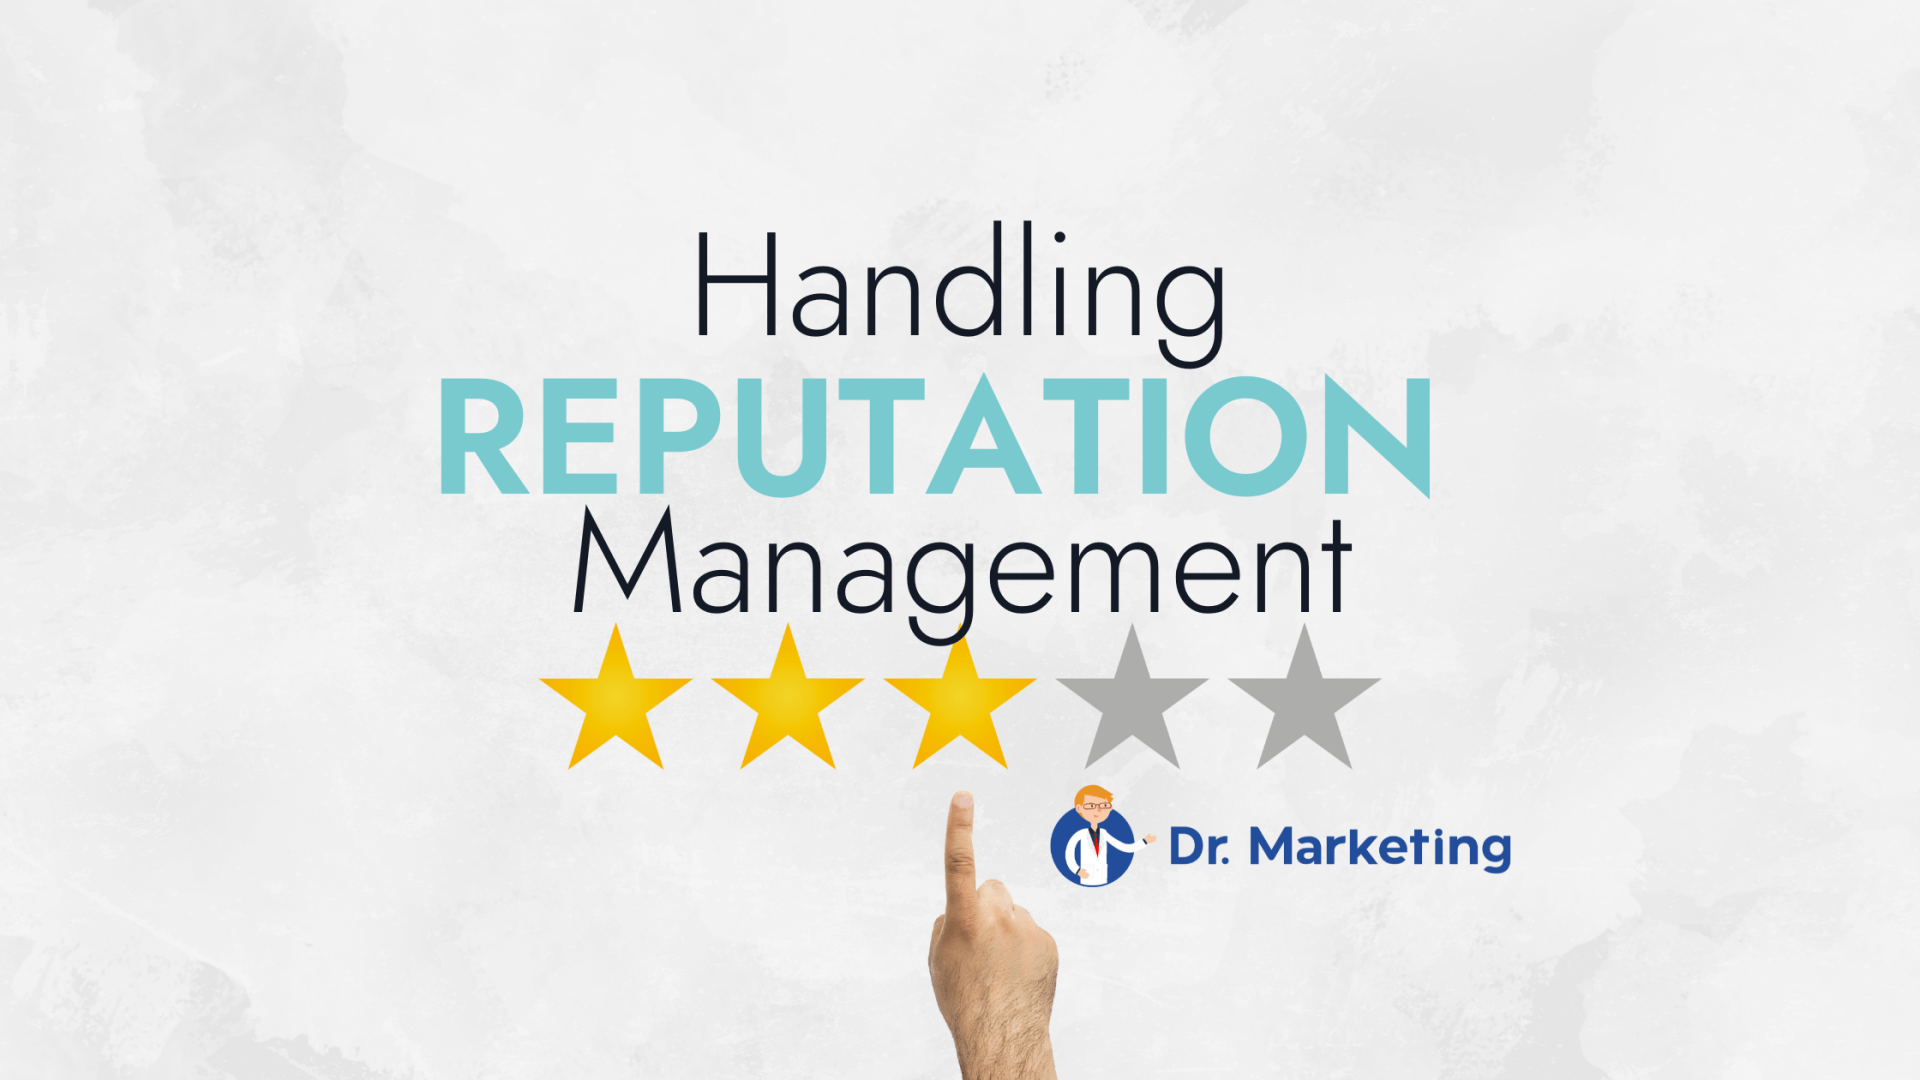 Handling Reputation Management | Reputation | Marketing | Reviews | Responding to Reviews | Negative Reviews | Digital Marketing | Reputation | Blue | Yellow | Stars